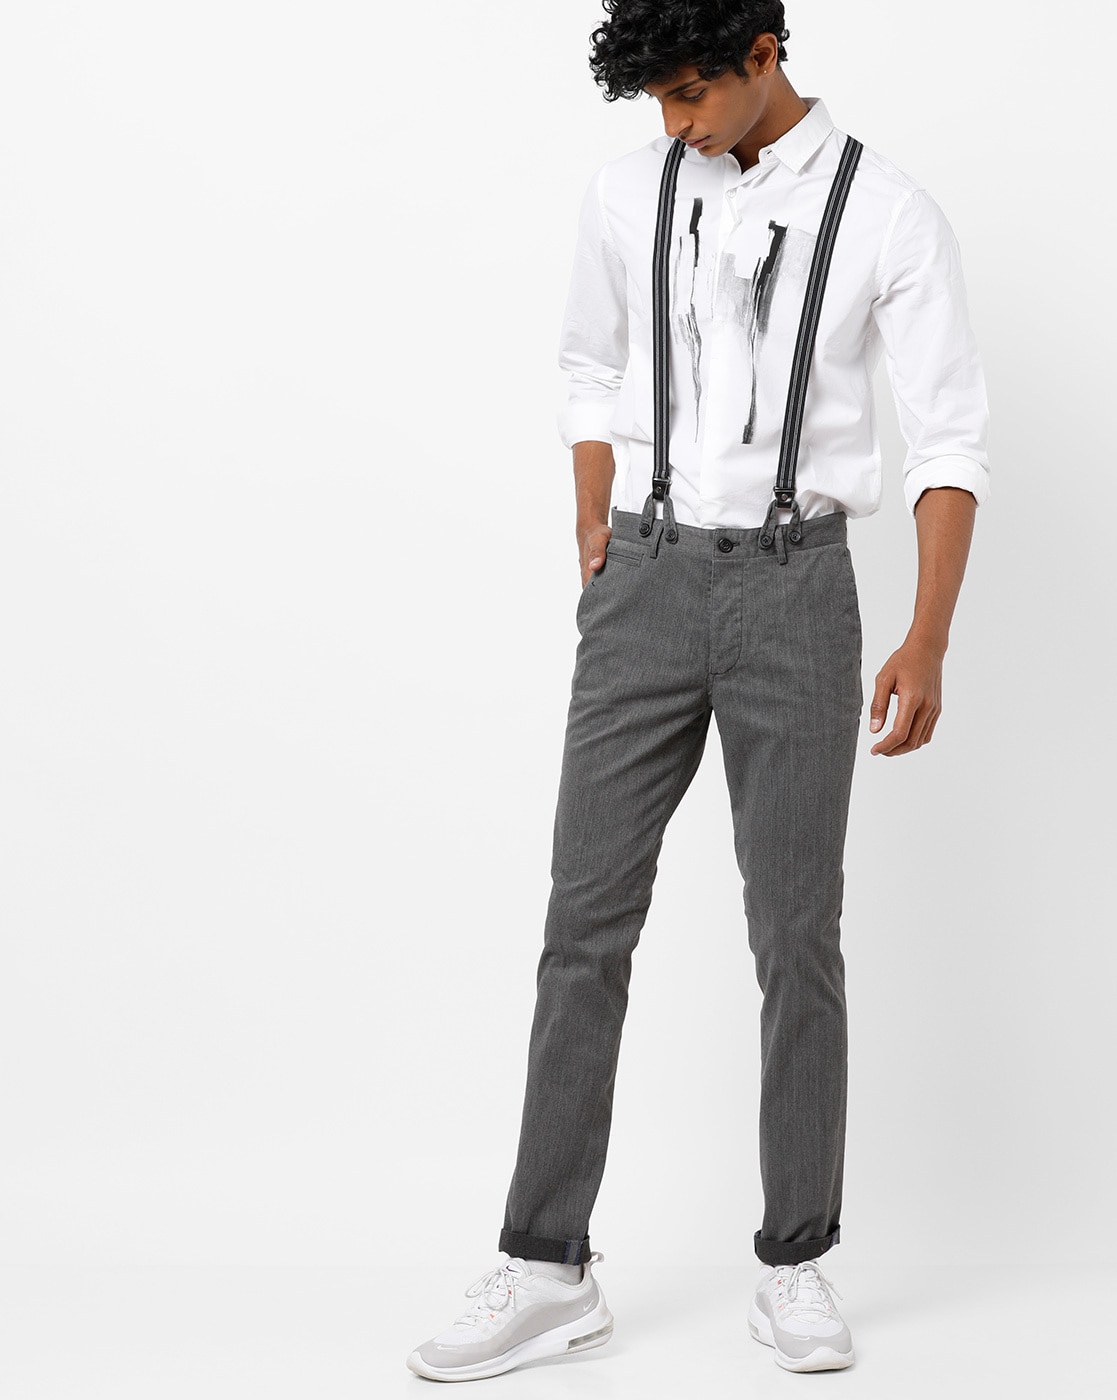 Buy Niepce Inc Streetwear Mens Techwear Pants with Straps Black6  3XLarge at Amazonin